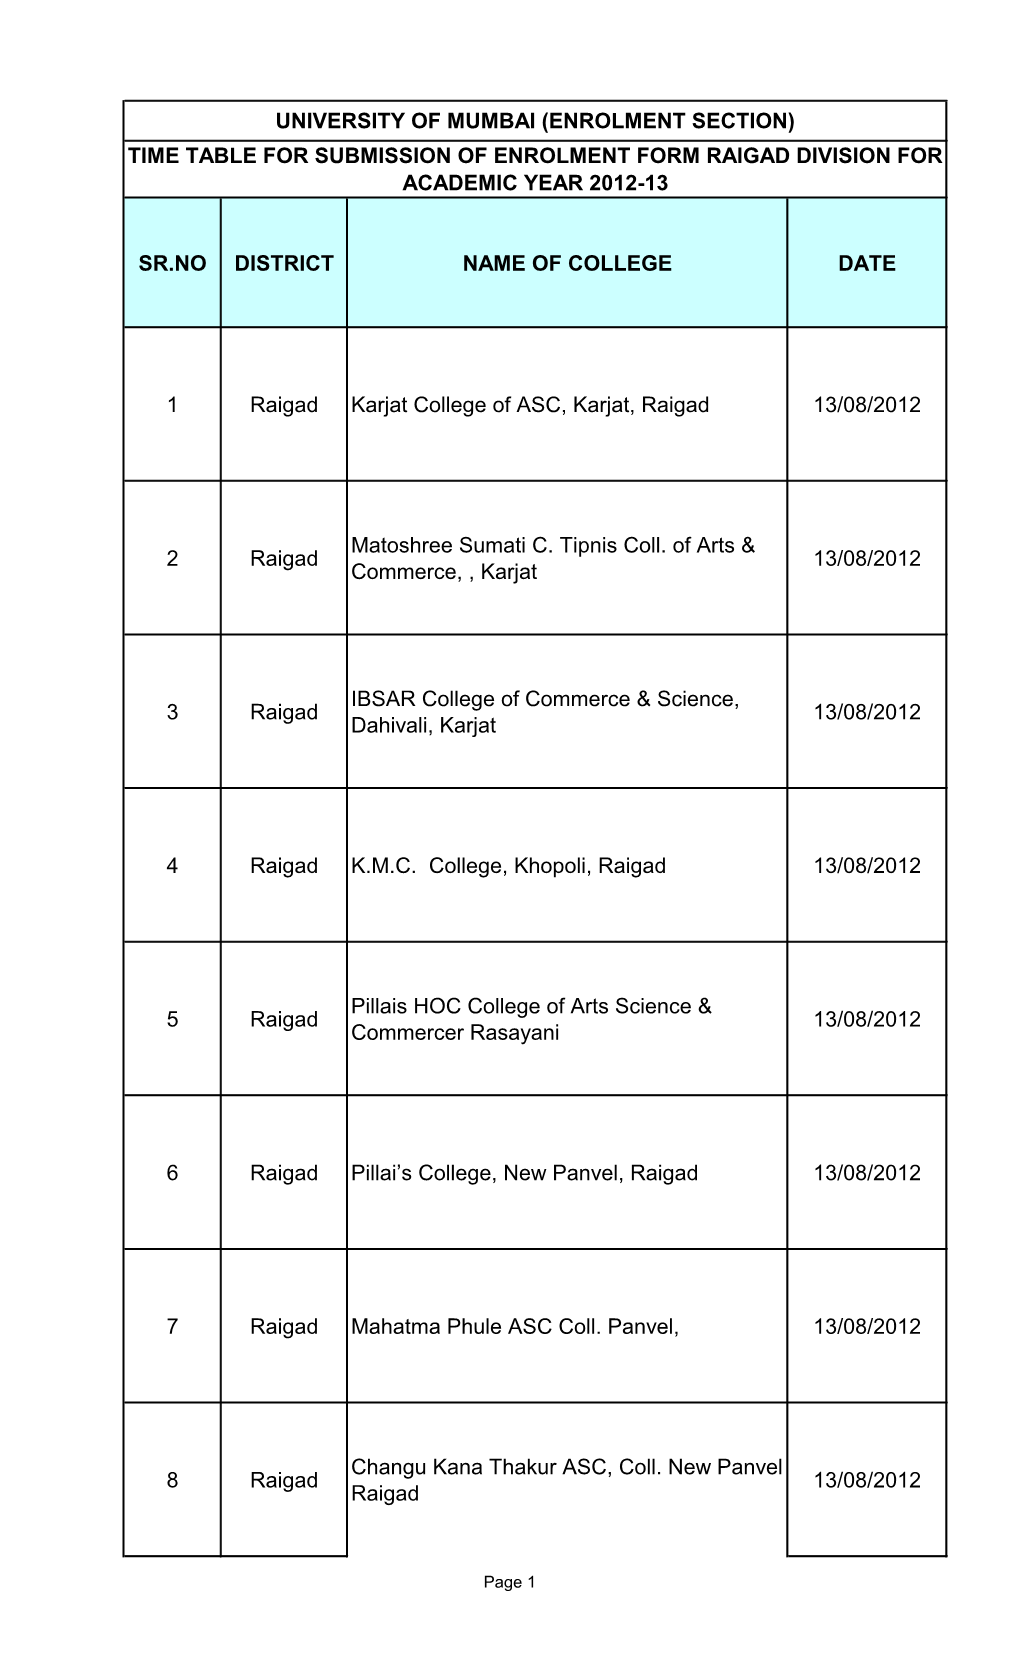 Raigad Division for Academic Year 2012-13